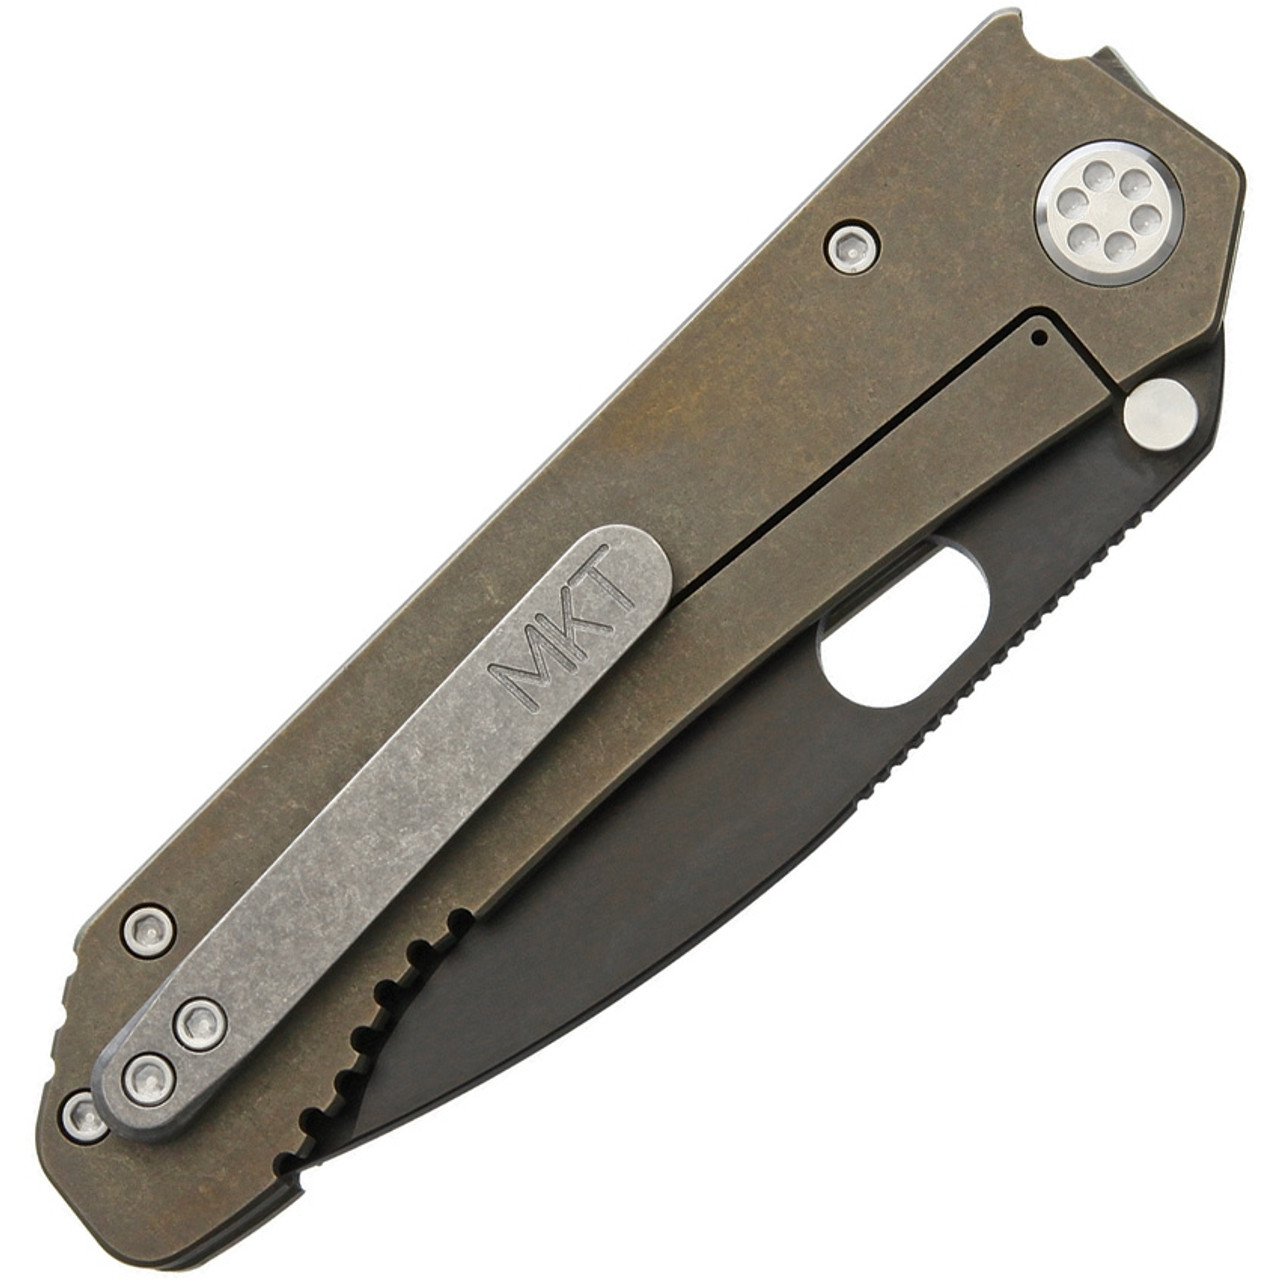 Medford 187 DP Frame Lock (MD002DPQ36A1) - 3.75in Black PVD Coated CPM D2 Tool Steel Plain Drop Point Blade, Bronze Titanium Handle